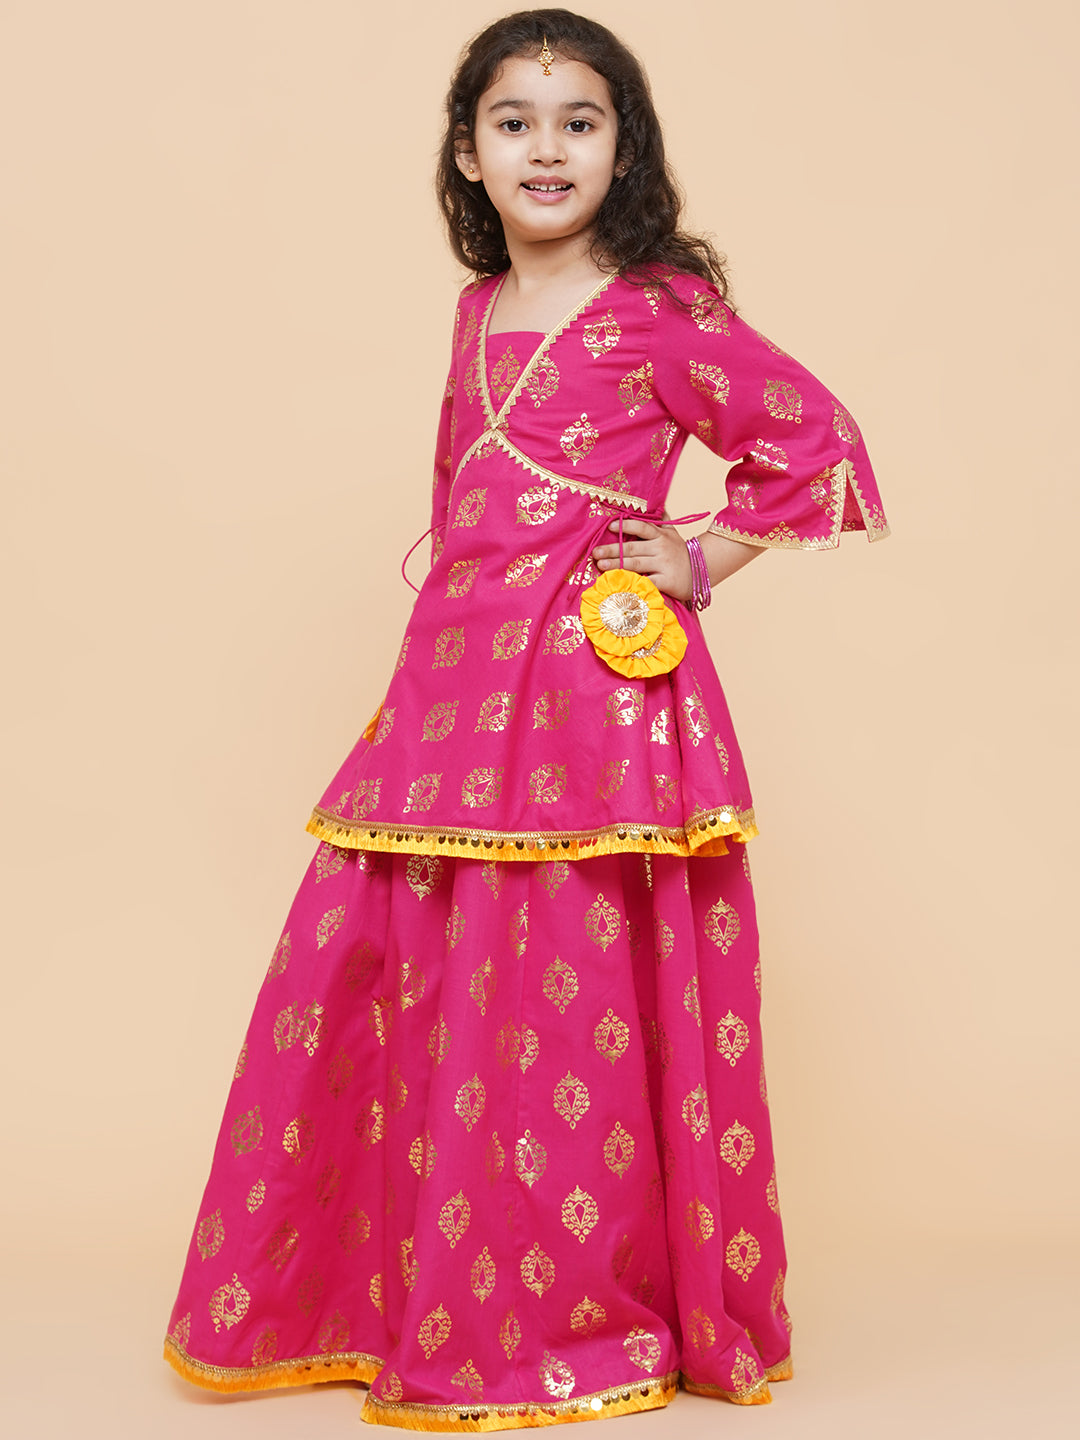 Girls Pink Foil Printed Ready To Wear Lehenga & Blouse With Dupatta - Bitiya By Bhama